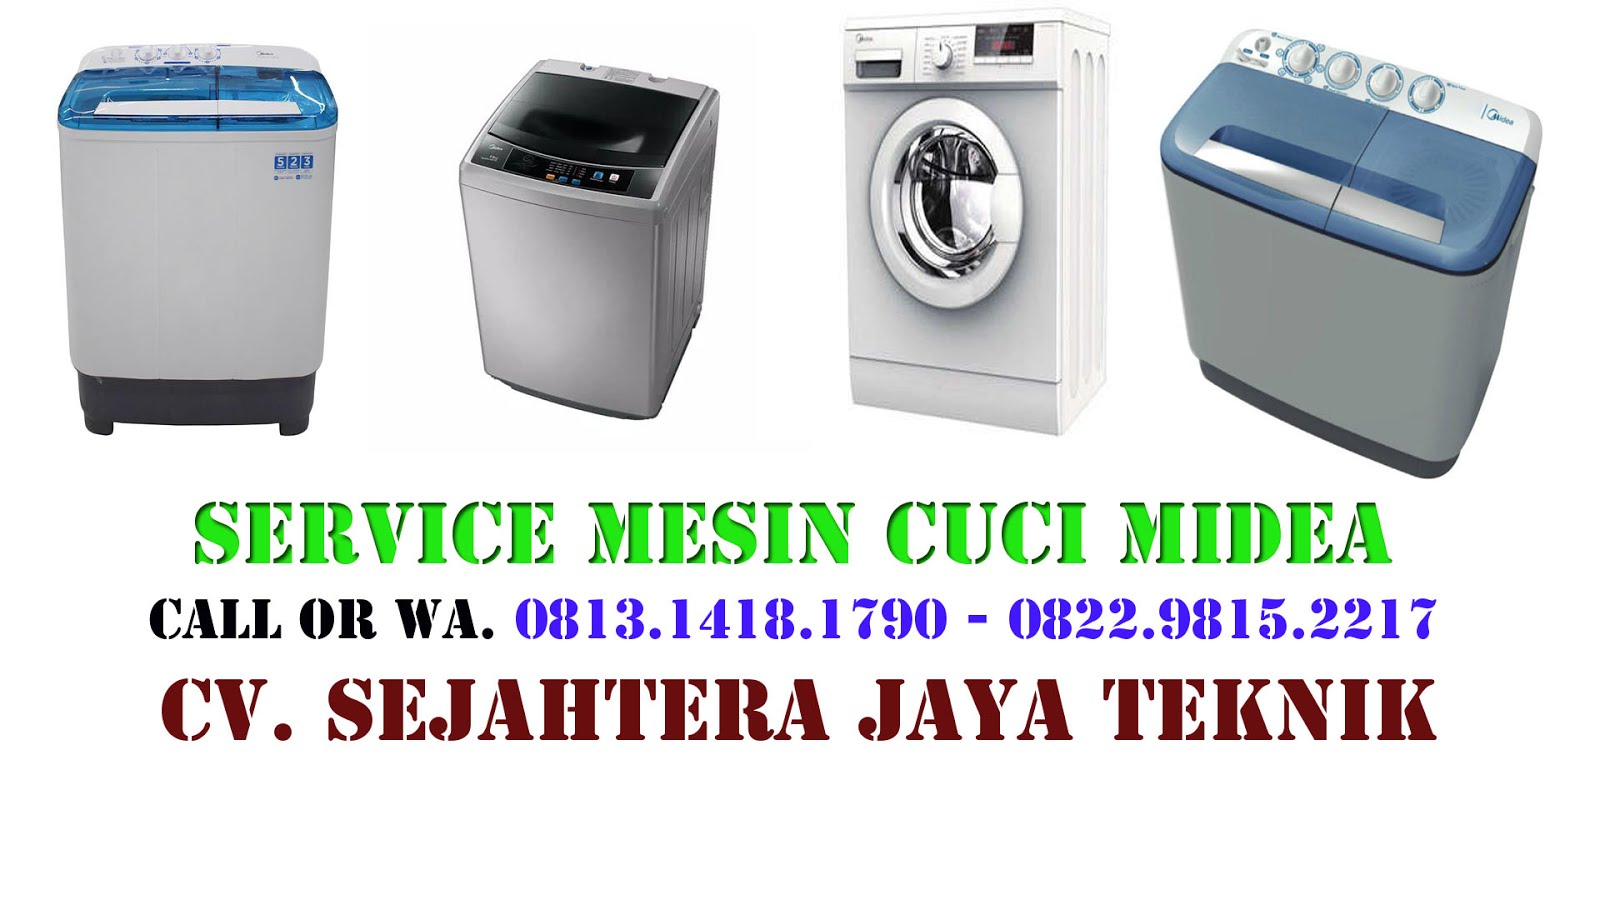 Service Mesin Cuci Midea di Jakarta Selatan